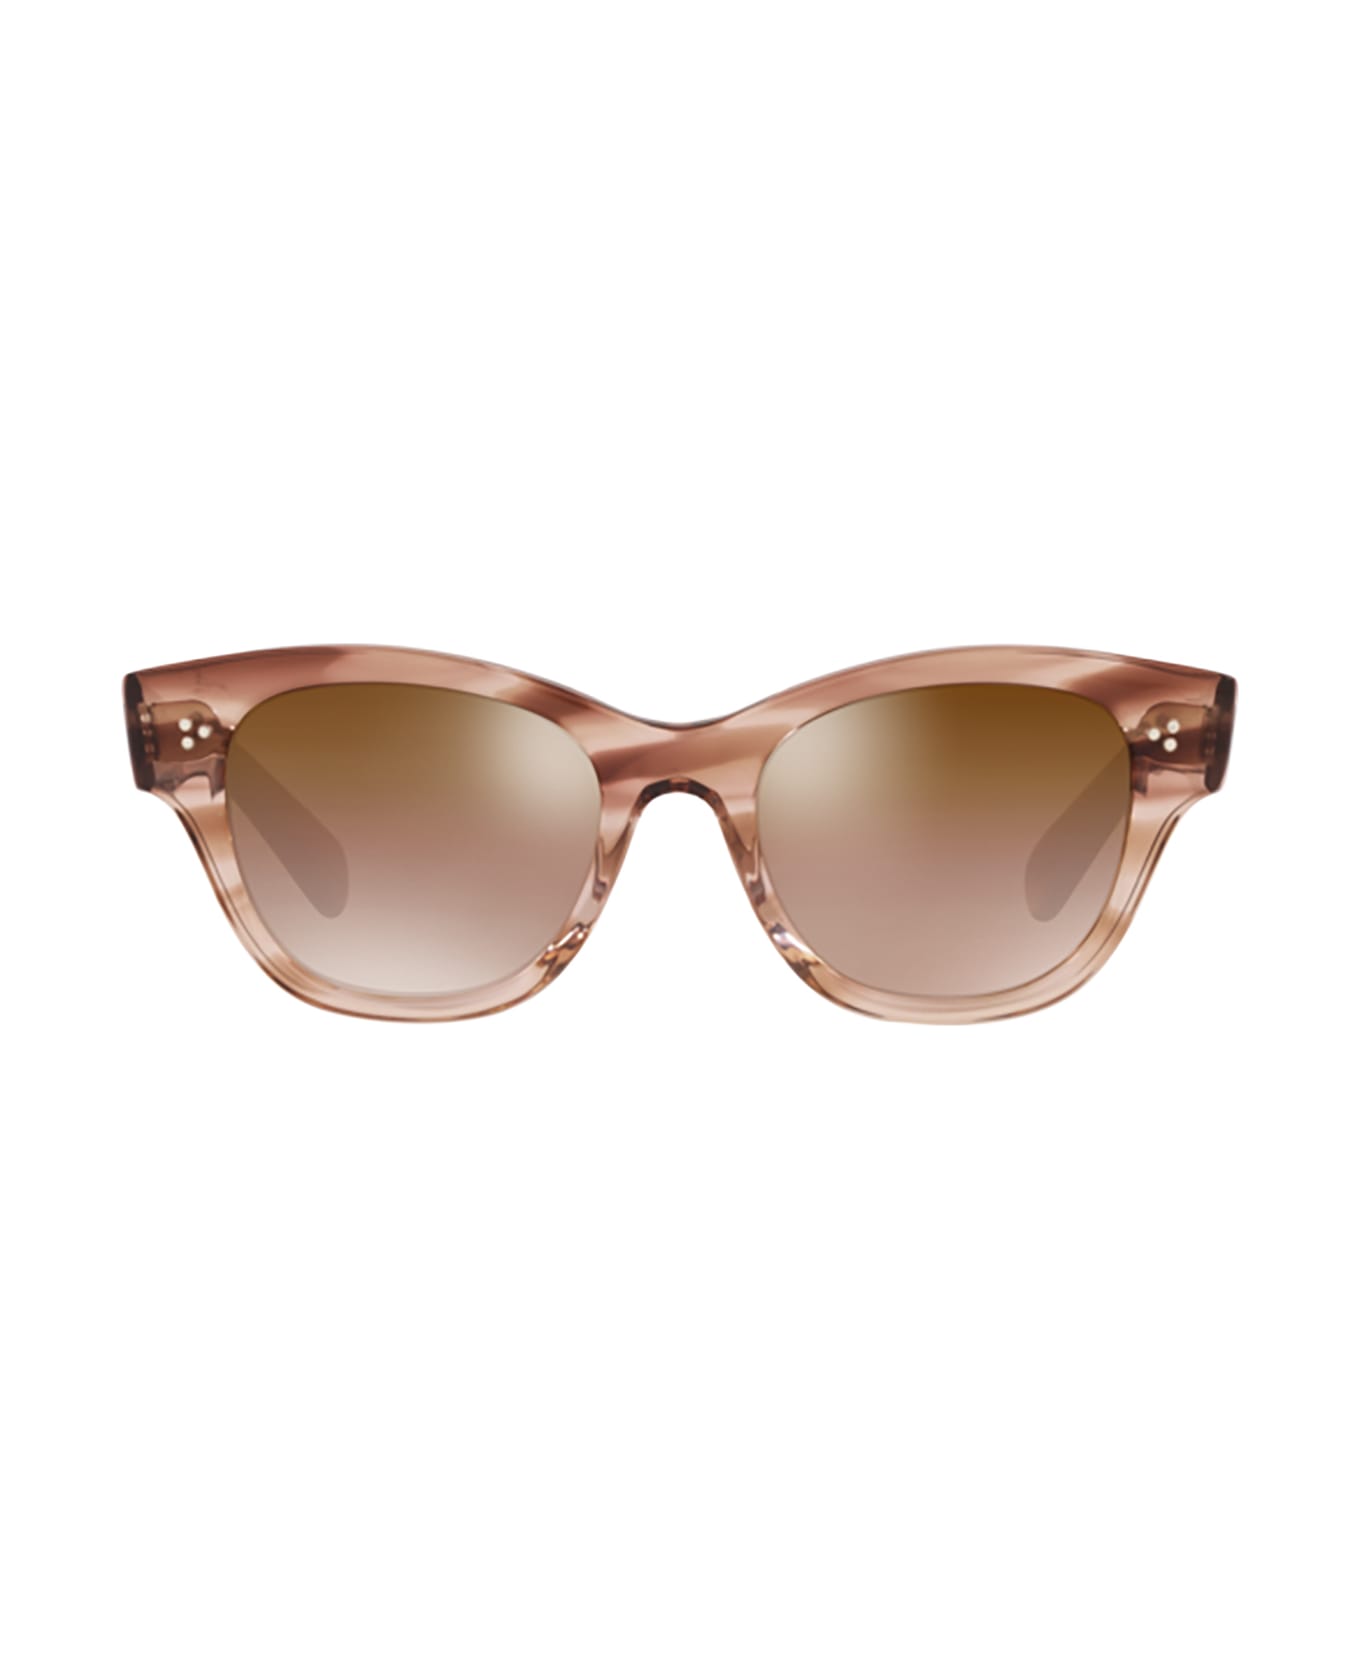 Oliver Peoples Ov5490su Washed Sunstone Sunglasses - Washed Sunstone サングラス